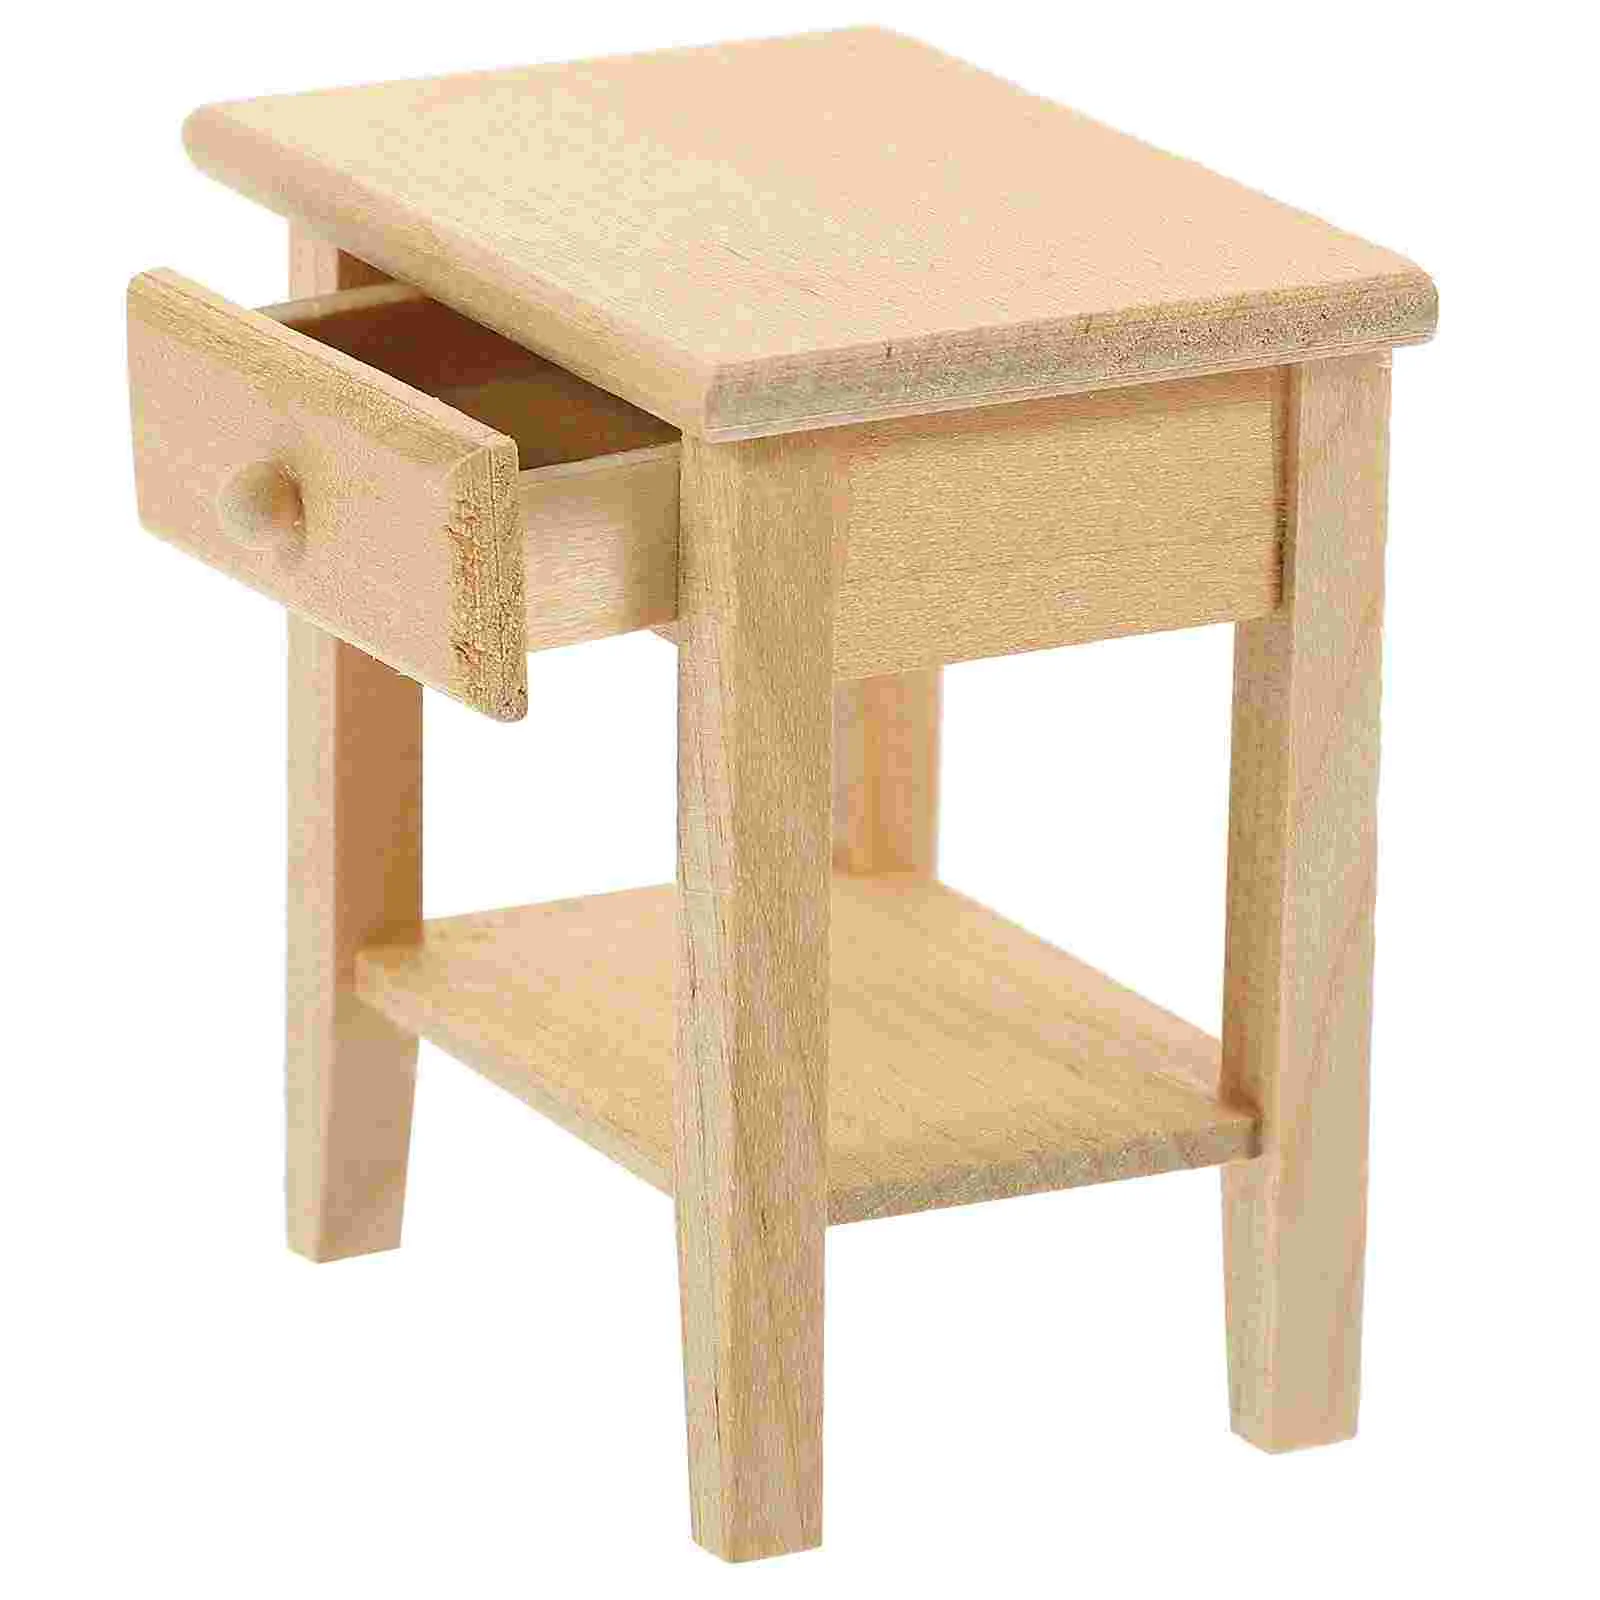 

House Decoration Mini Wood Desk Model Miniature Table Minature Dollhouse Wooden End Tables Tiny